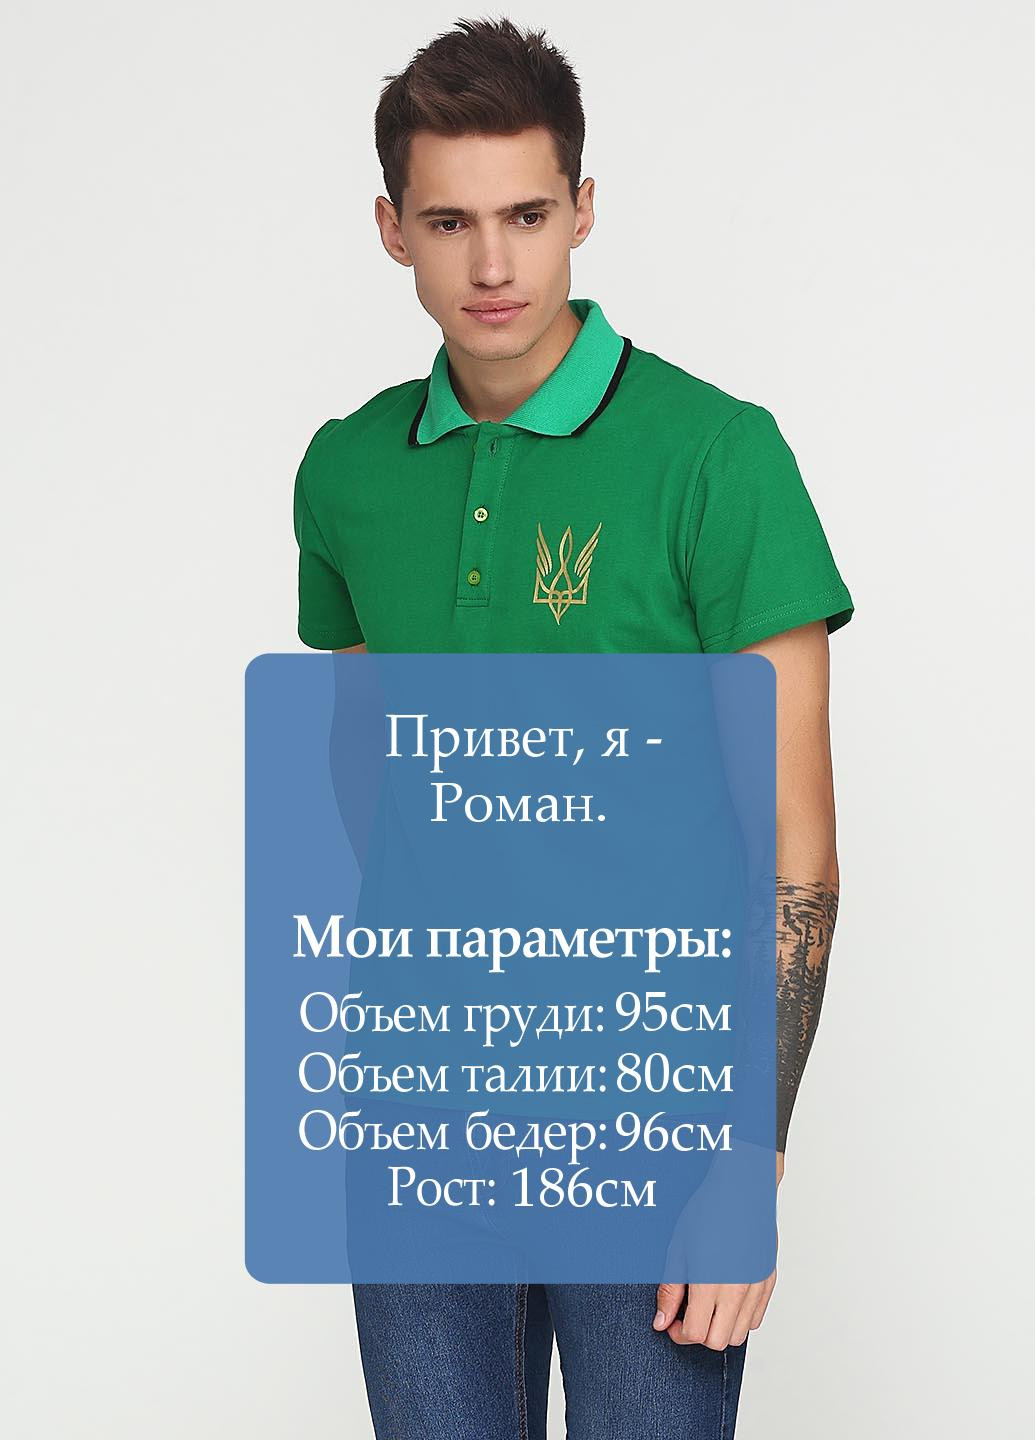 Зеленая футболка-поло для мужчин Tryapos с рисунком